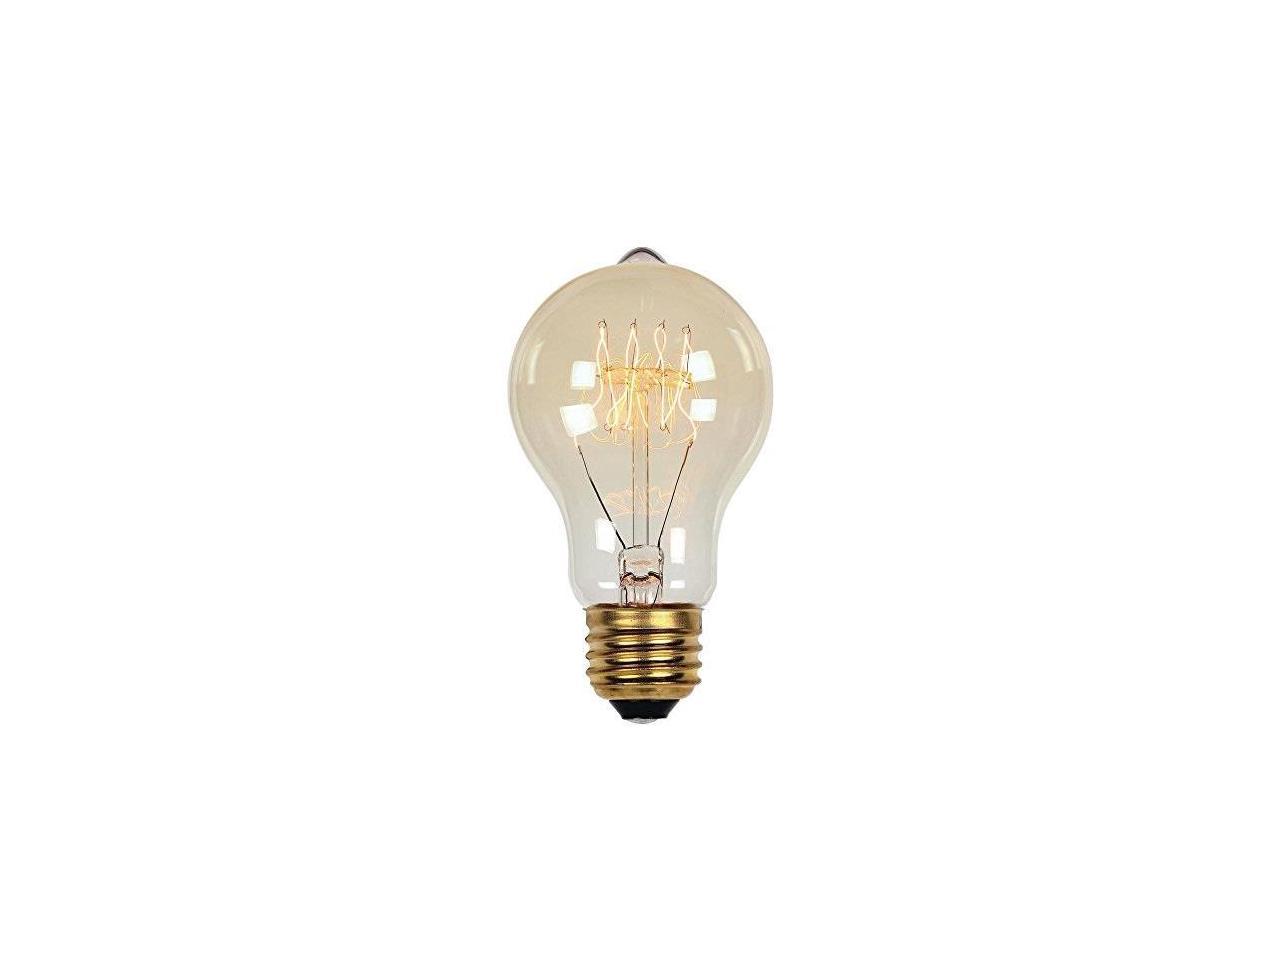 Westinghouse 03604 Incandescent Light Bulb 40w Flood for sale online 